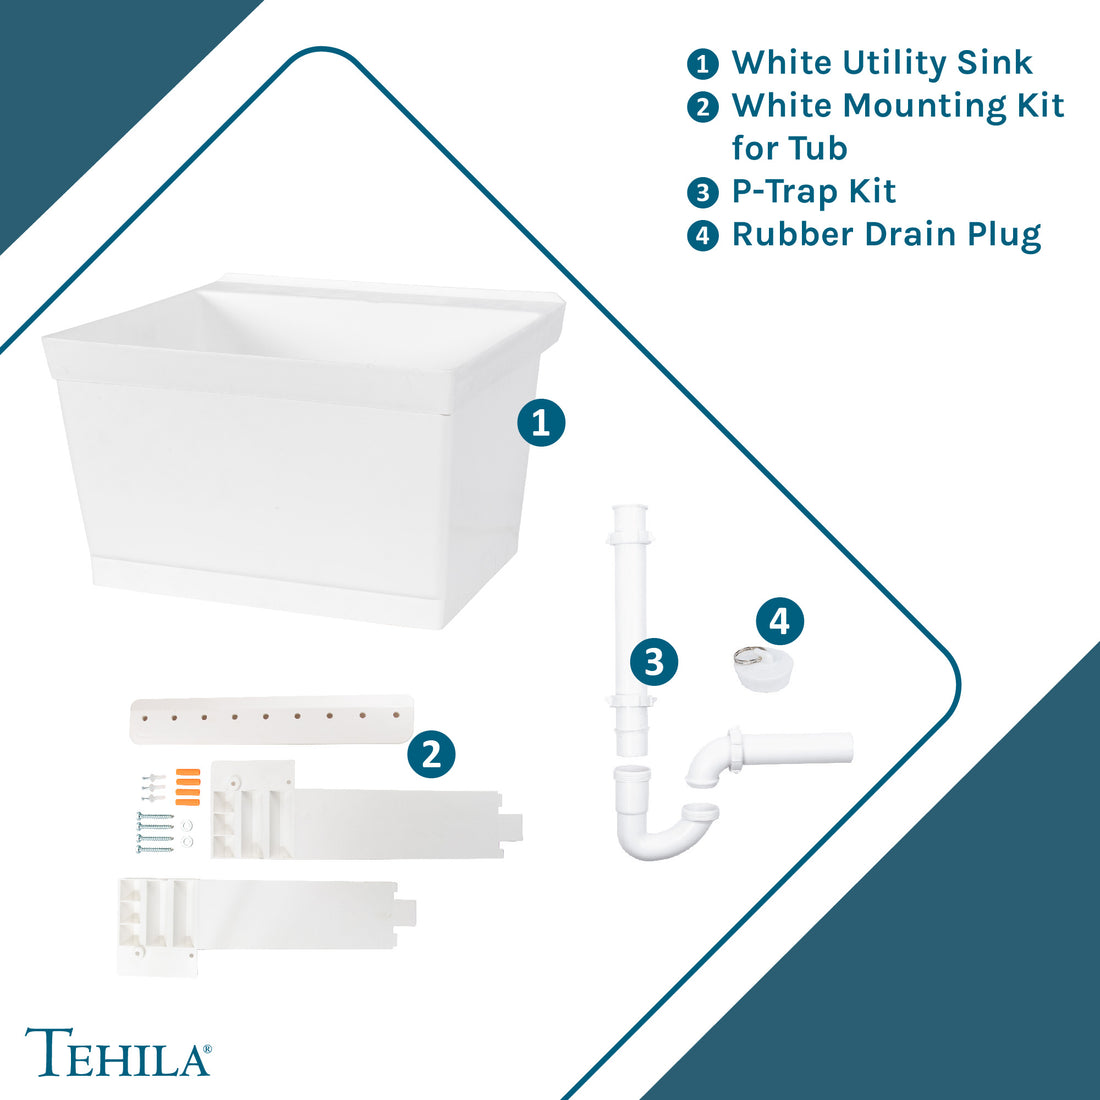 White Standard Utility Sink Contents White Utility Sink |  White Mounting Kit for Tub | P-Trap Kit | Rubber Drain Plug